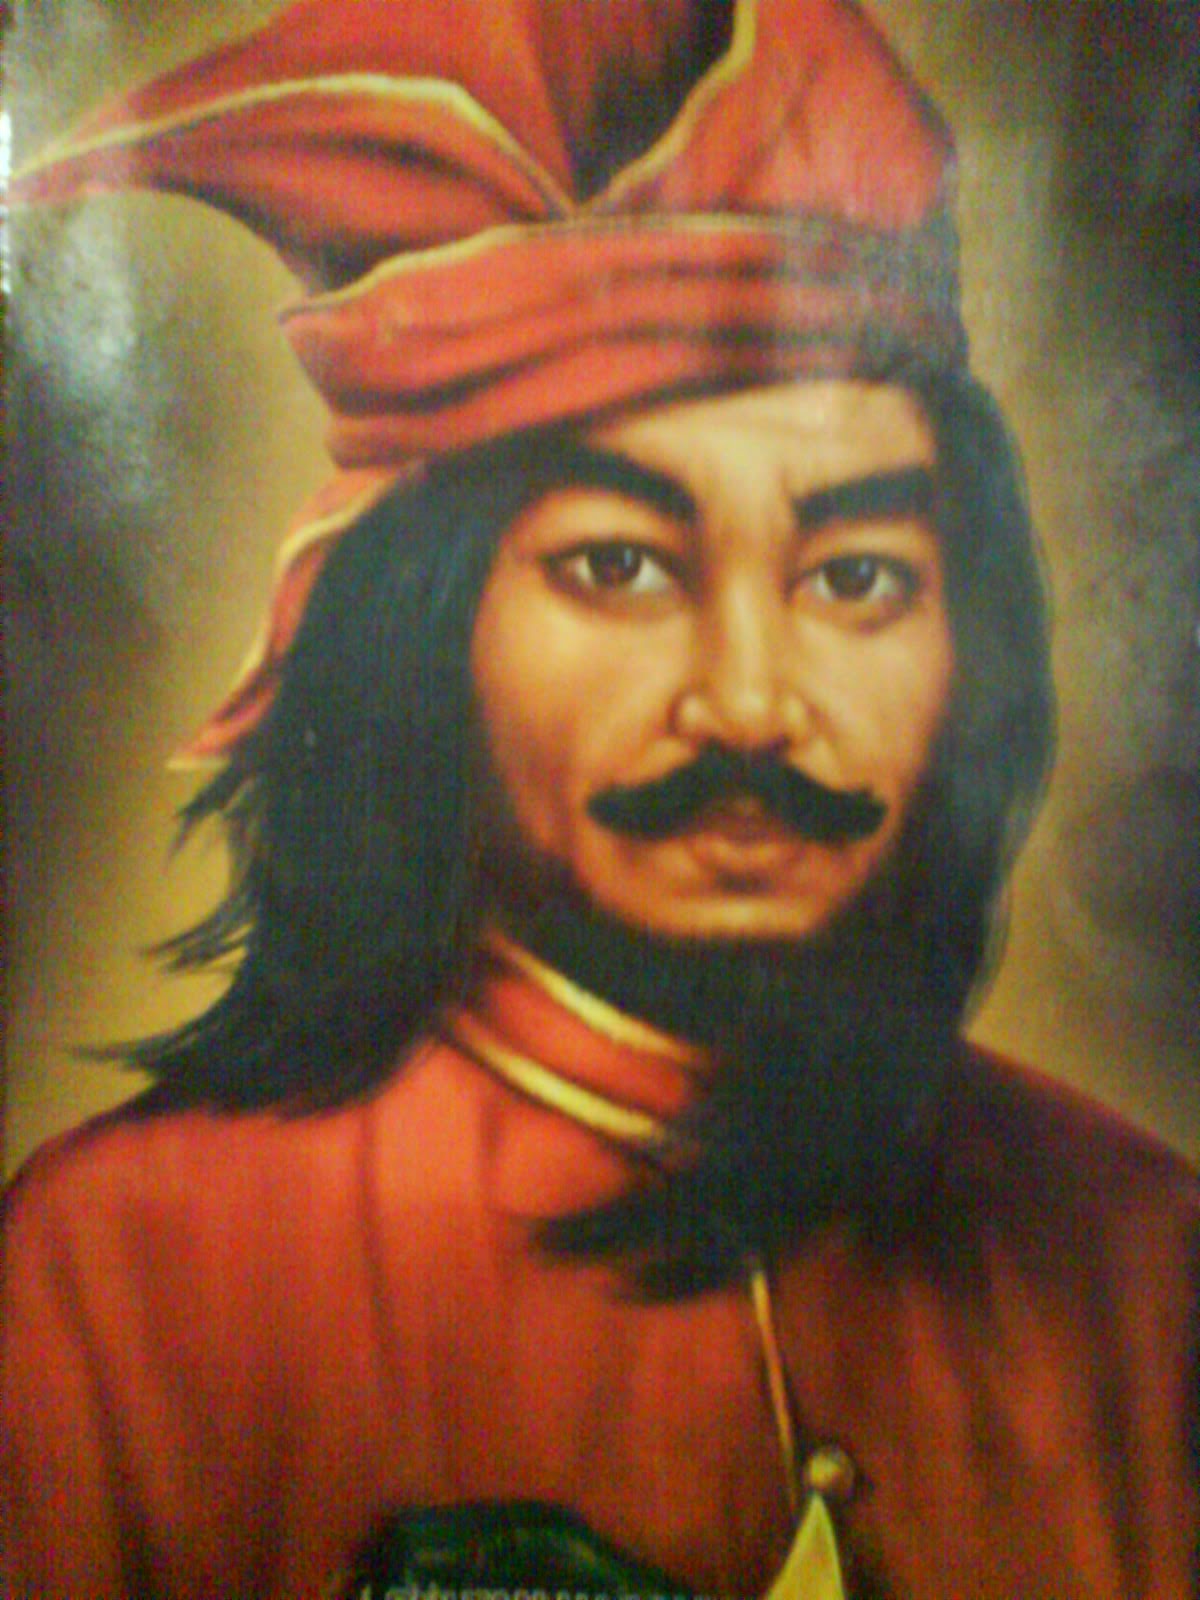 Cerita Sultan Hasanuddin